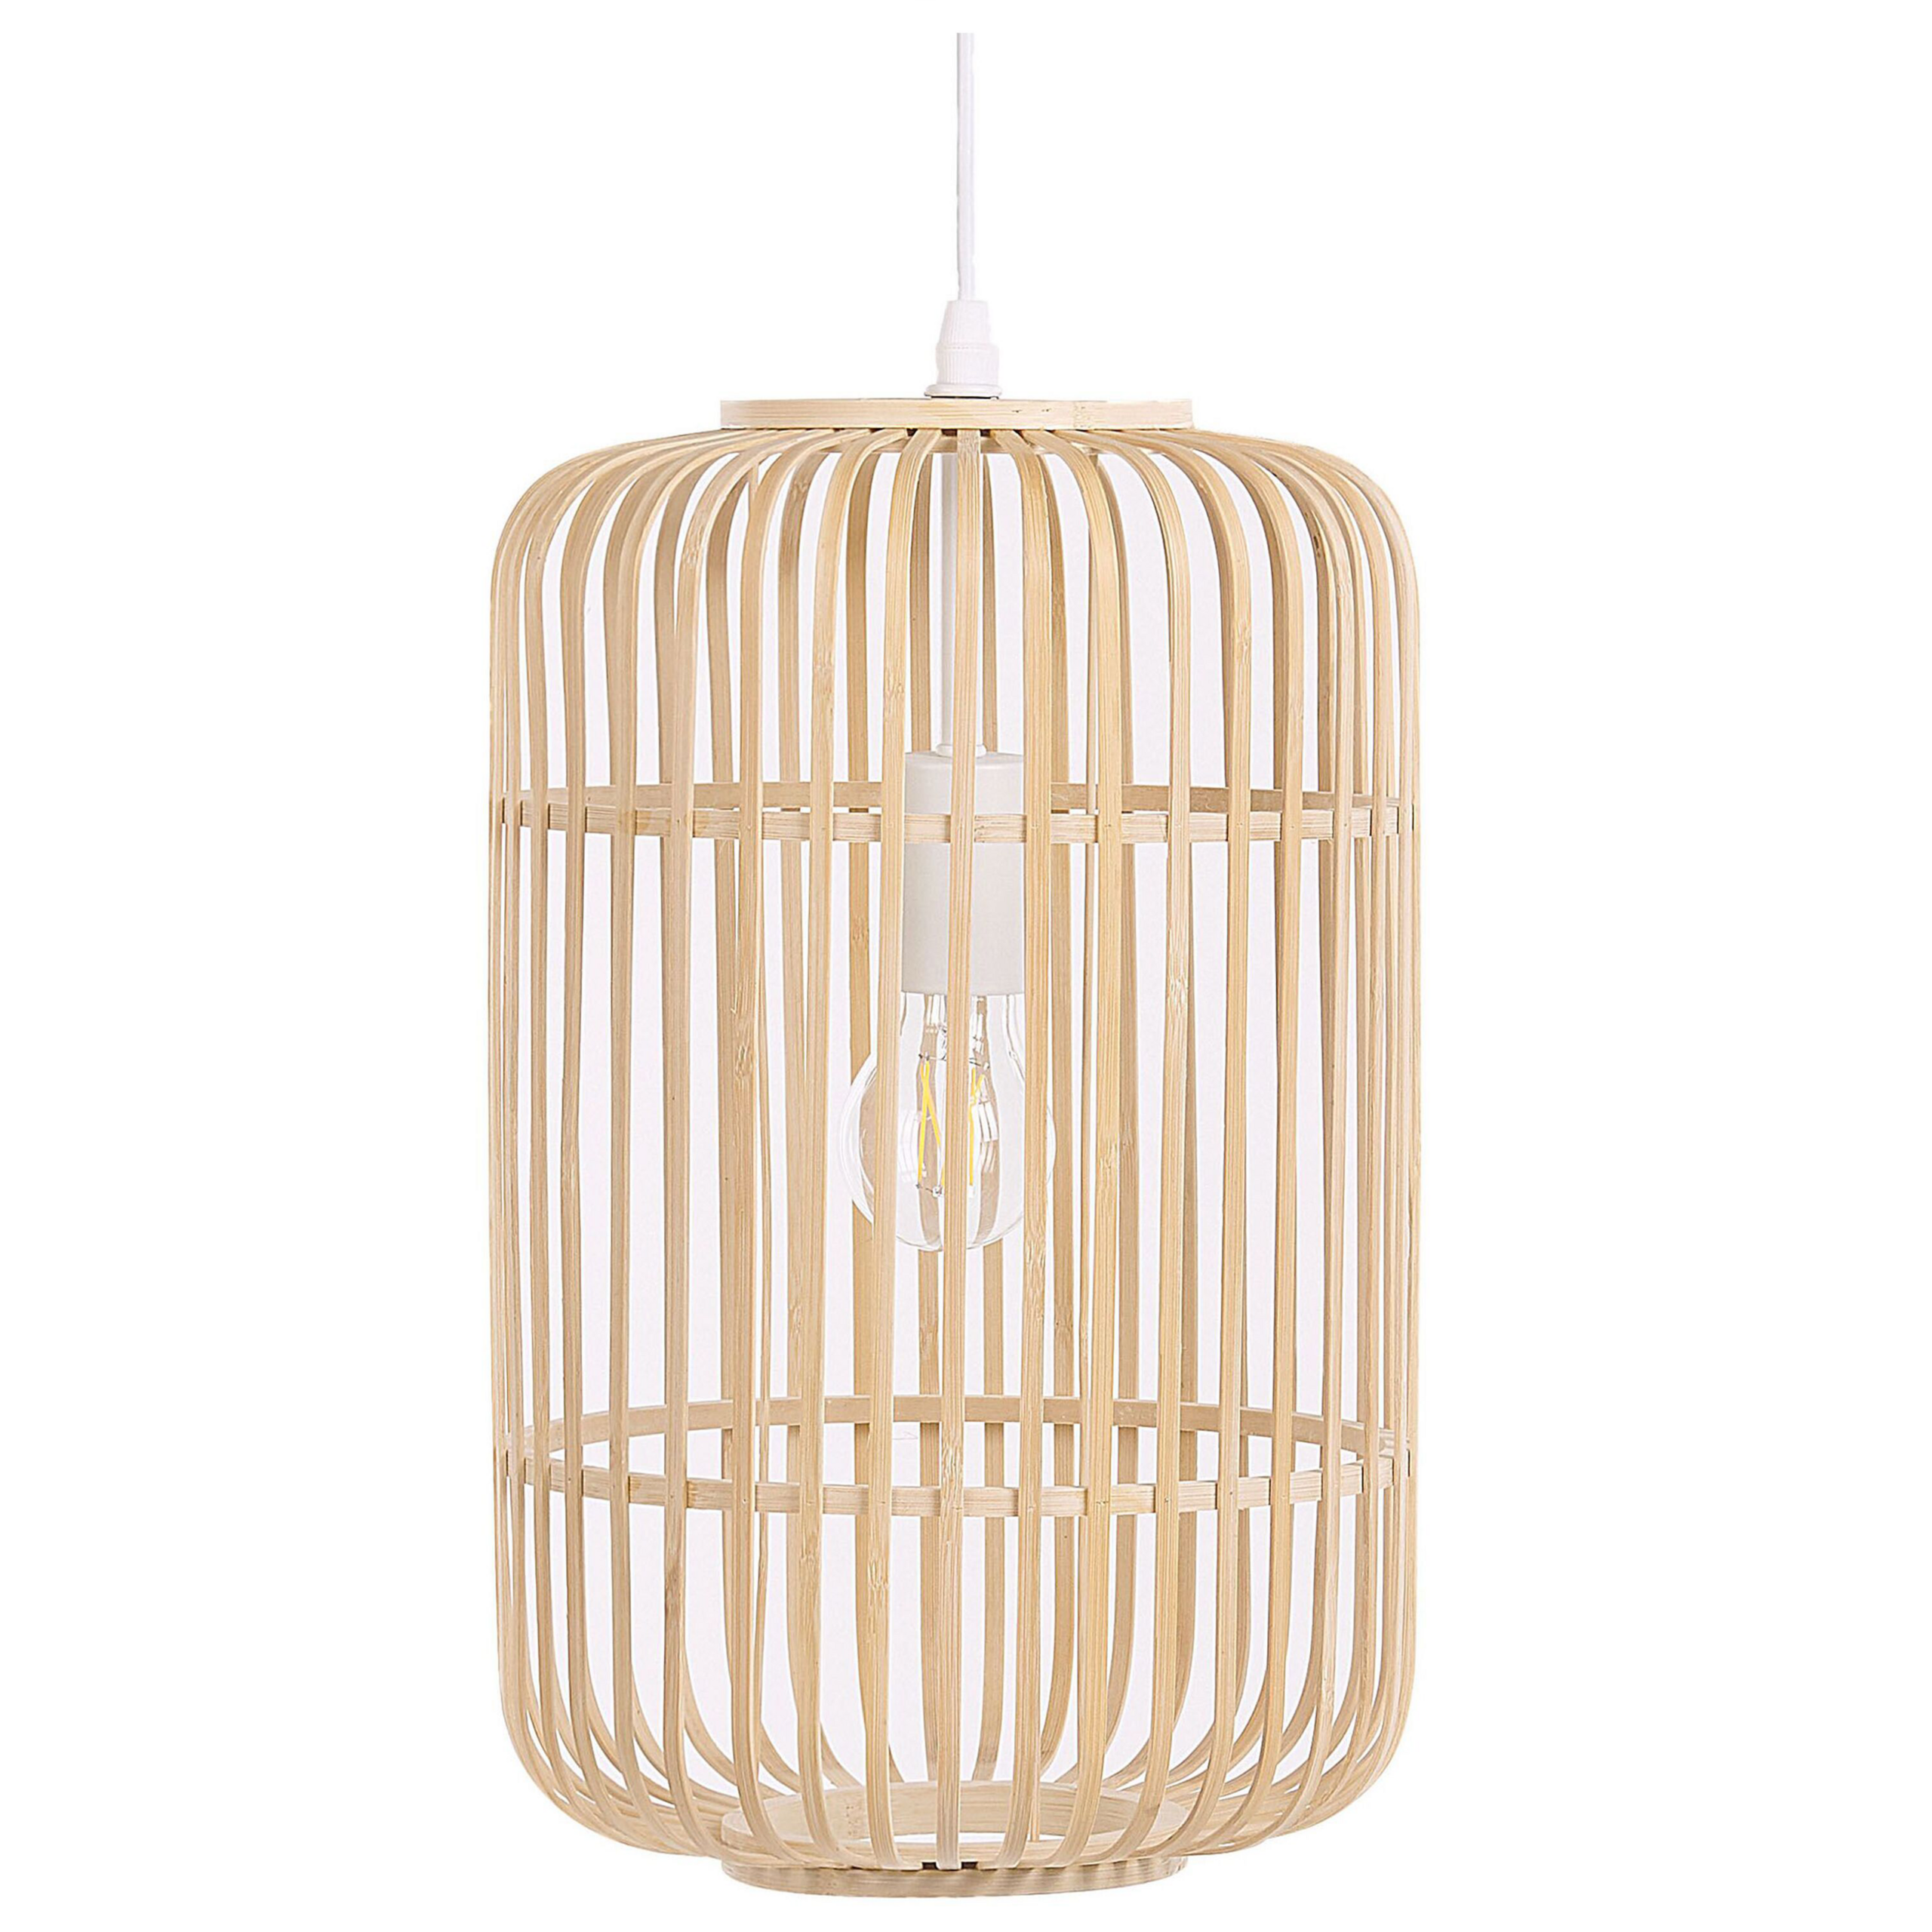 Beliani Pendant Lamp Light Wood Bamboo Oval Shade Hanging Ceiling Lamp